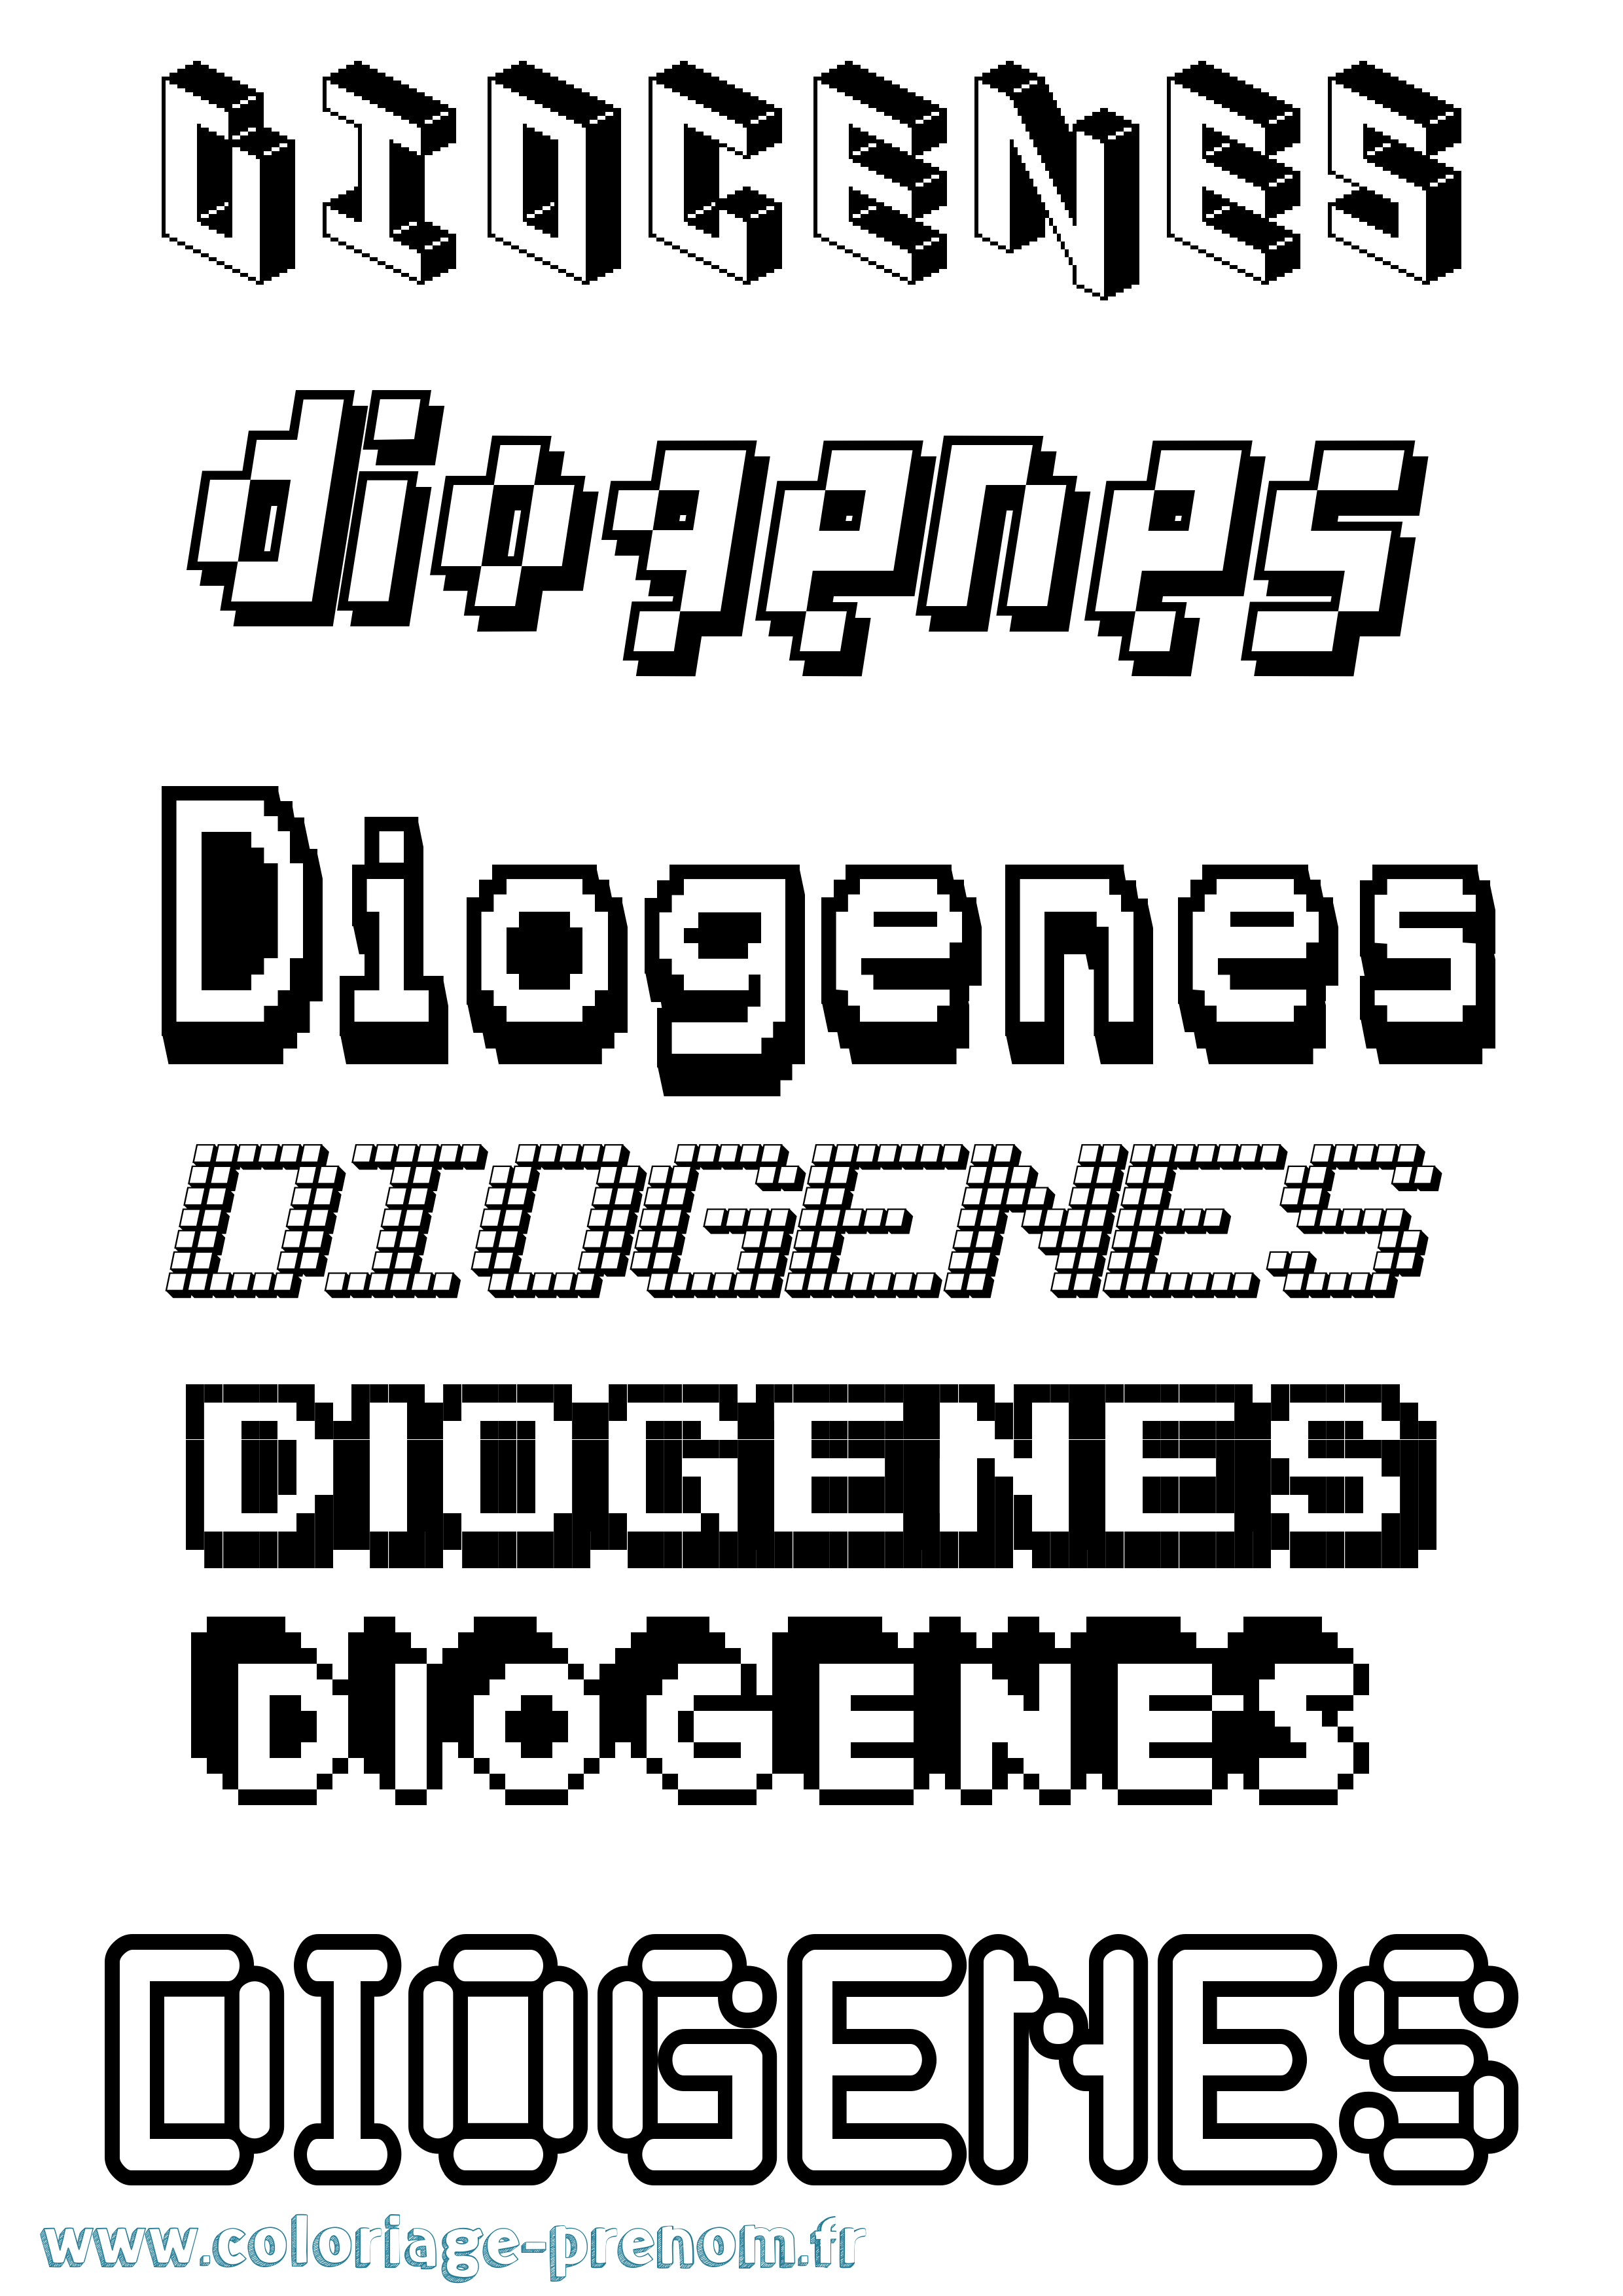 Coloriage prénom Diogenes Pixel